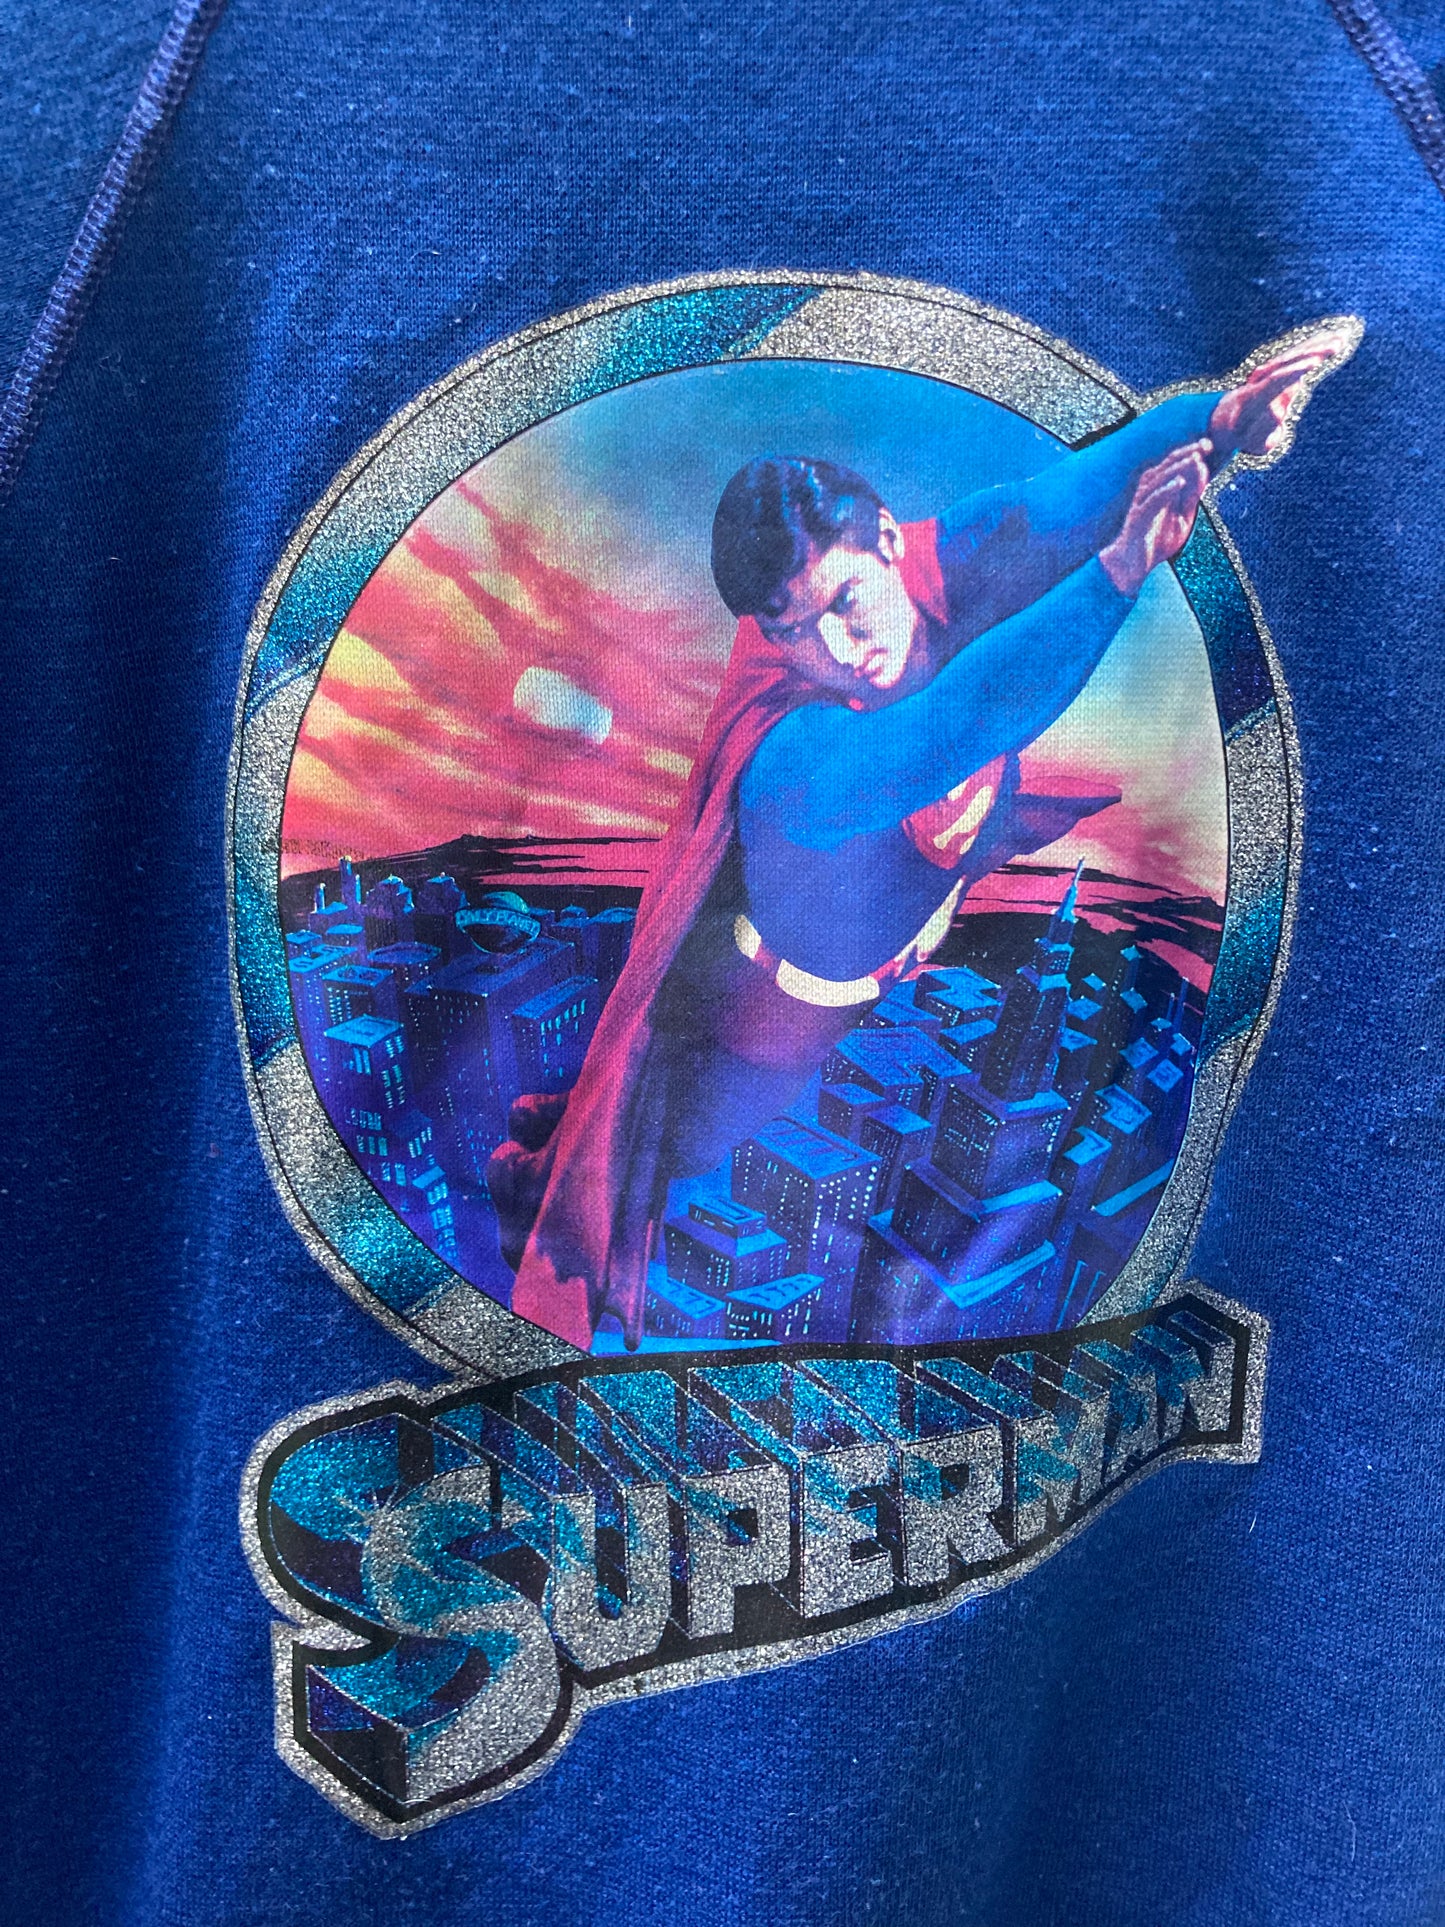 Sweater Superman 1970-80